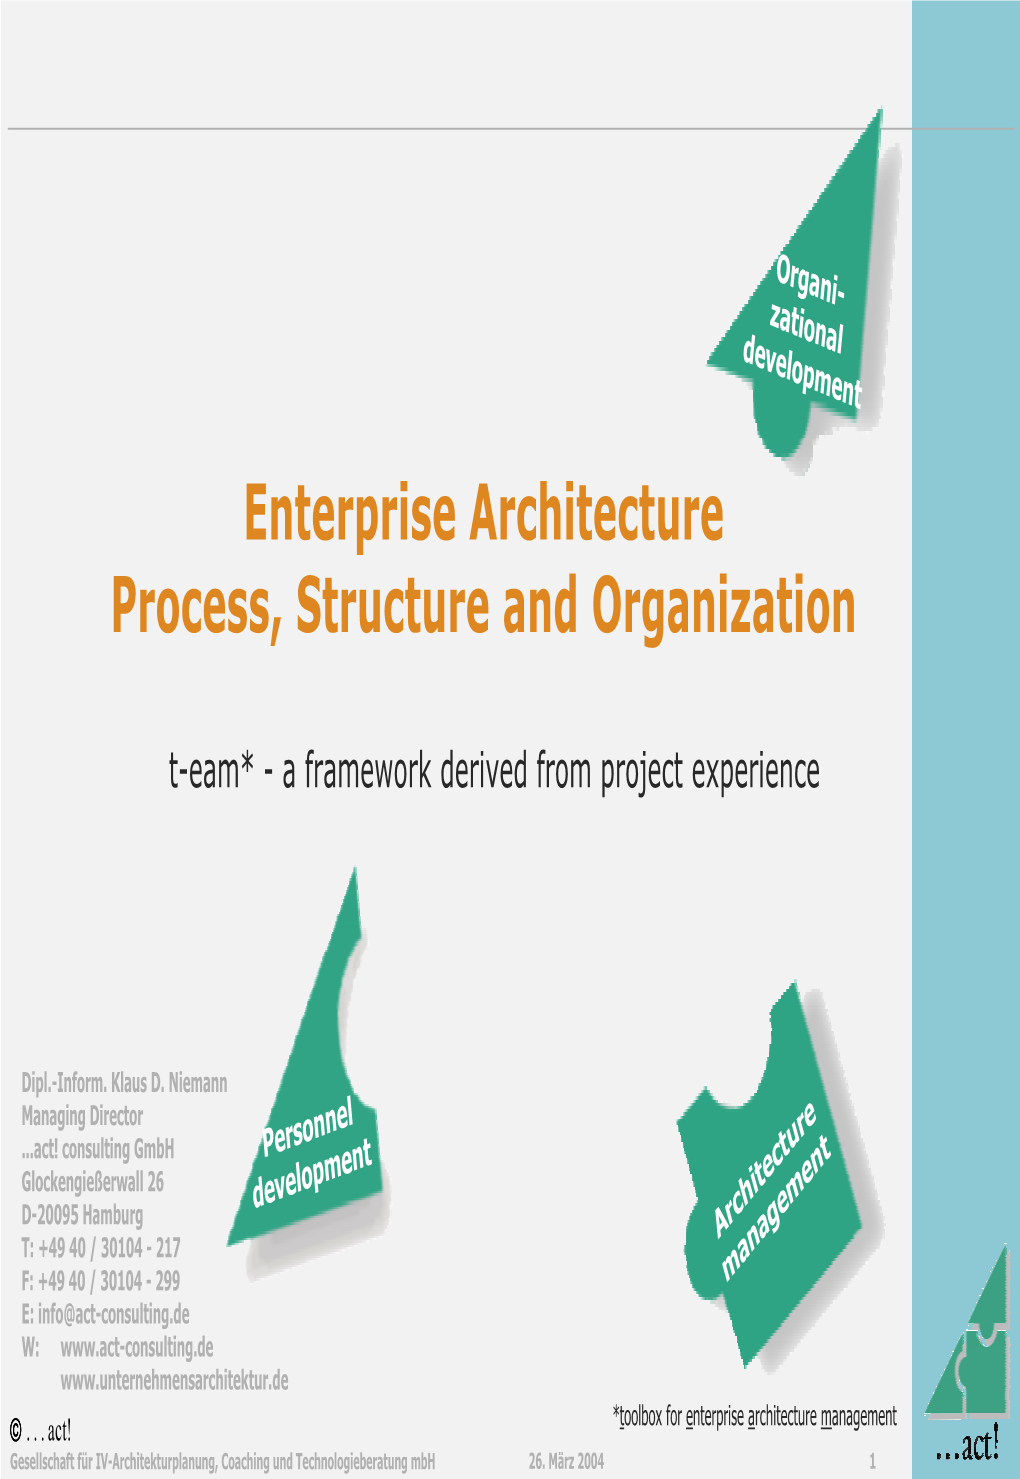 Enterprise Architecture Process, Structure and Organization